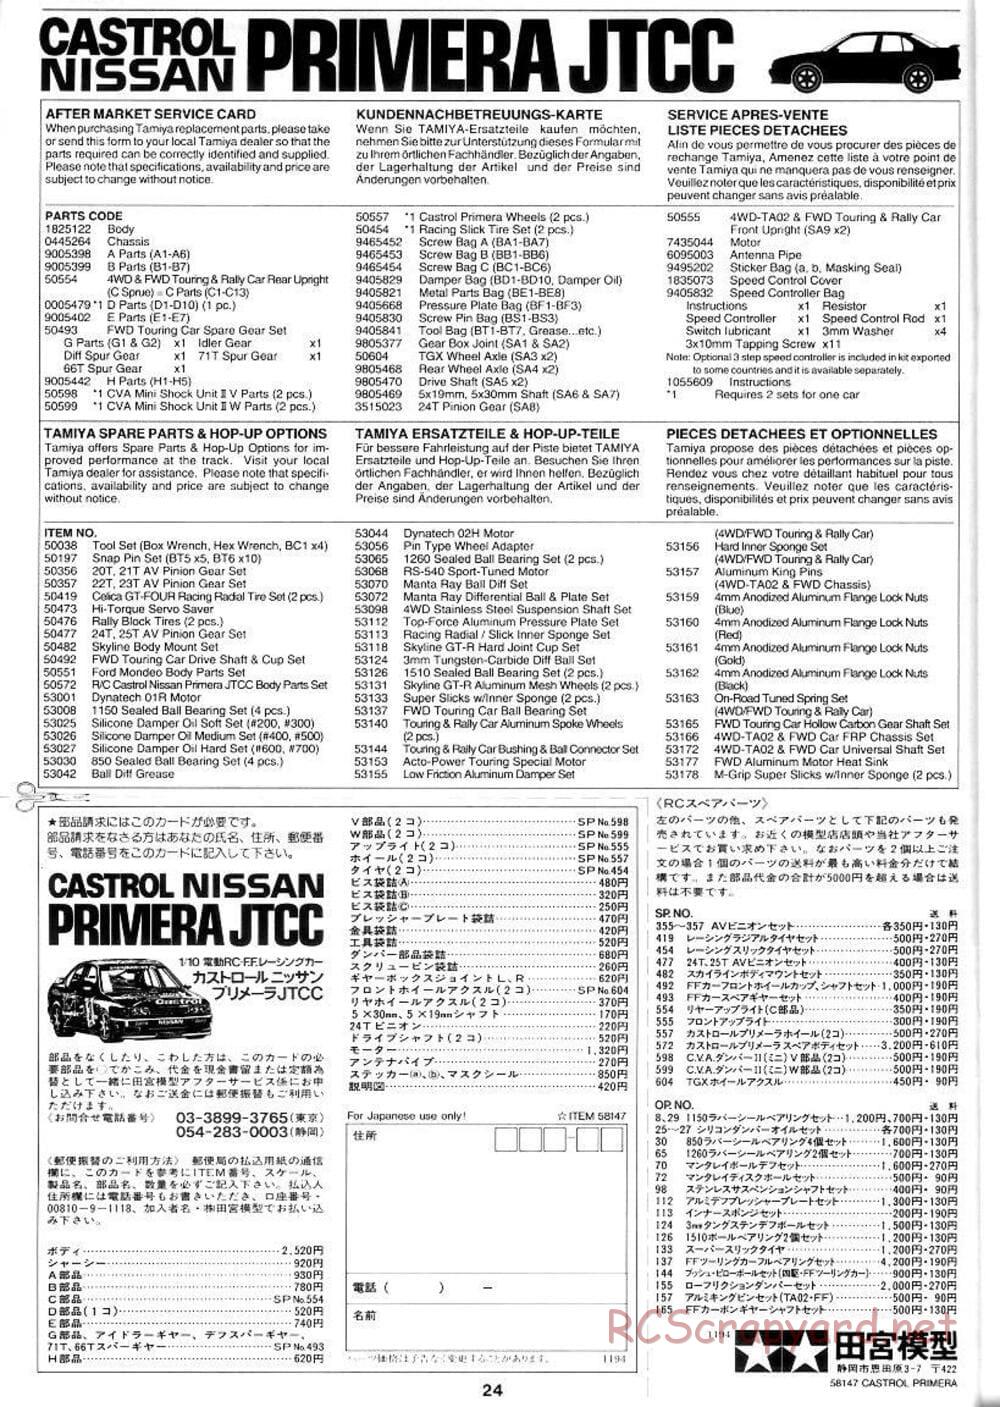 Tamiya - Castrol Nissan Primera JTCC - FF-01 Chassis - Manual - Page 24